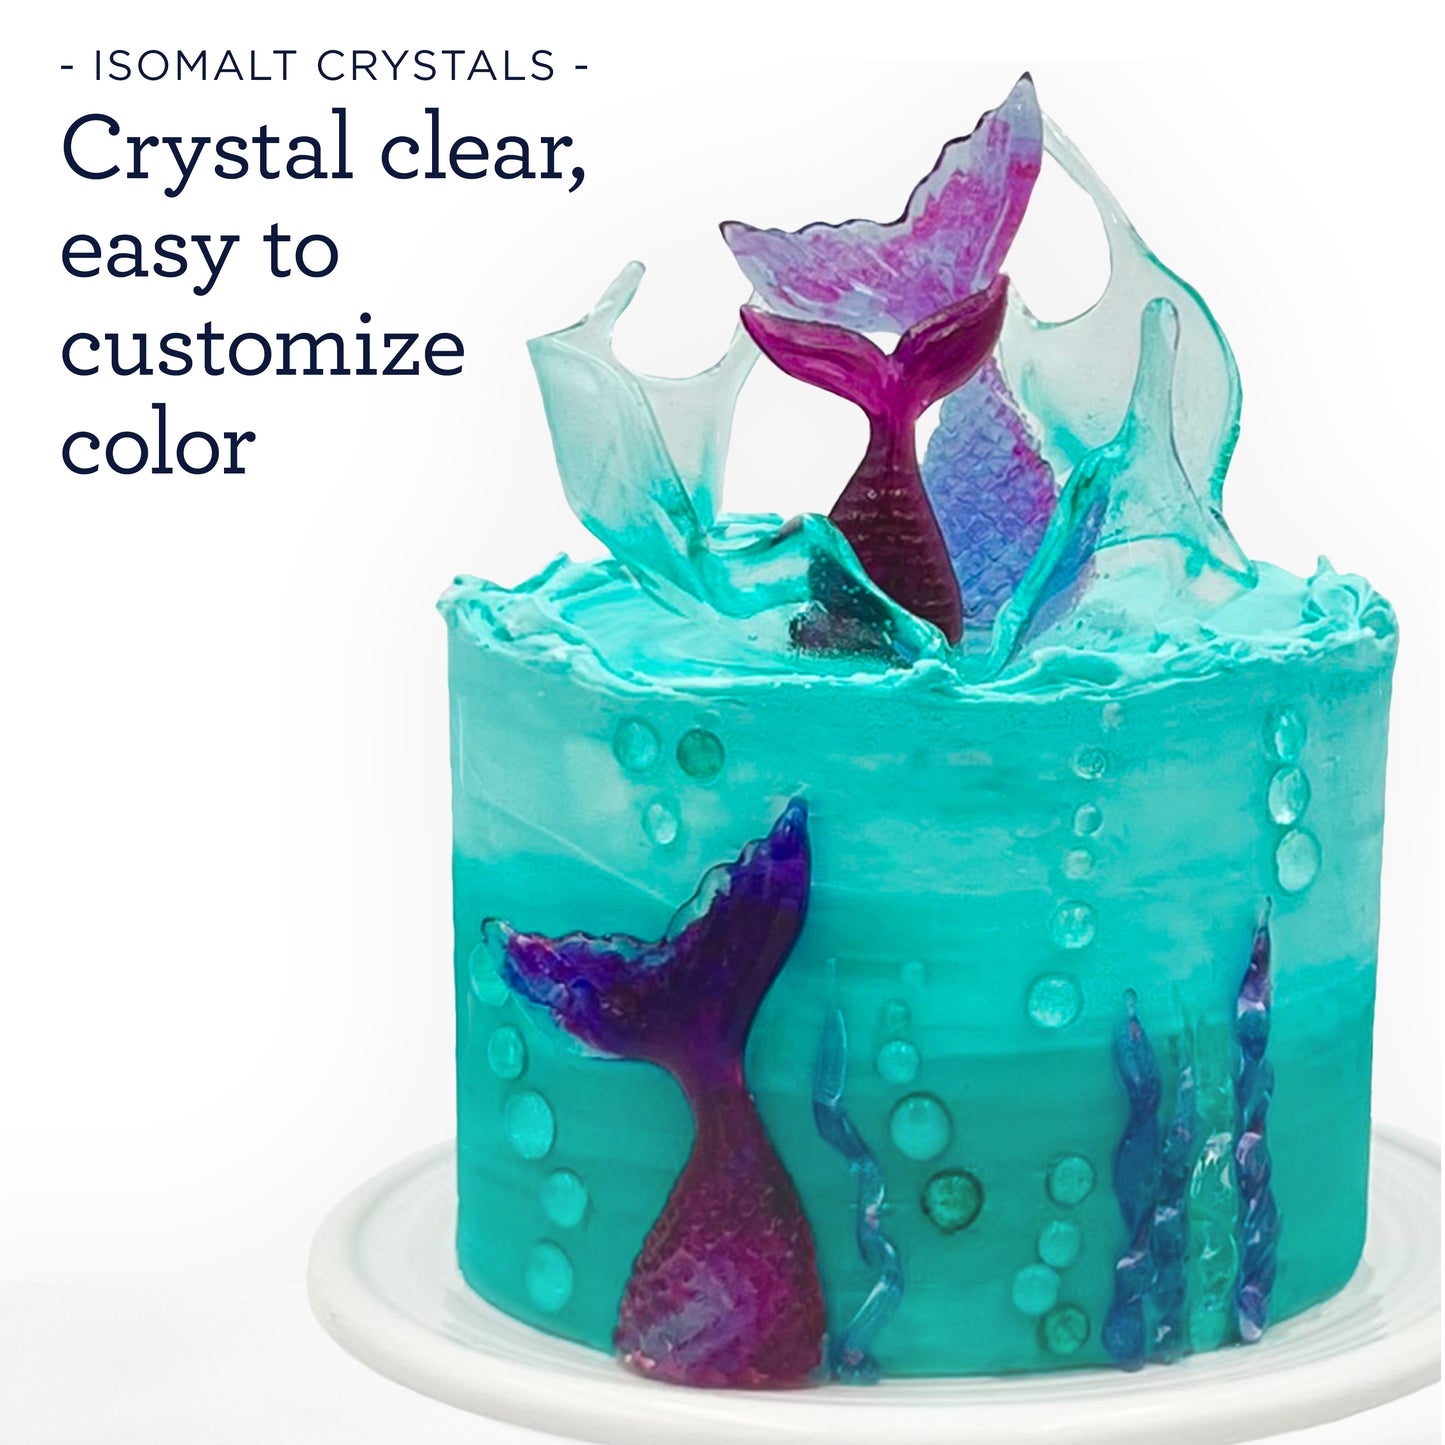 Satin Ice Isomalt Crystals - 1 lb.